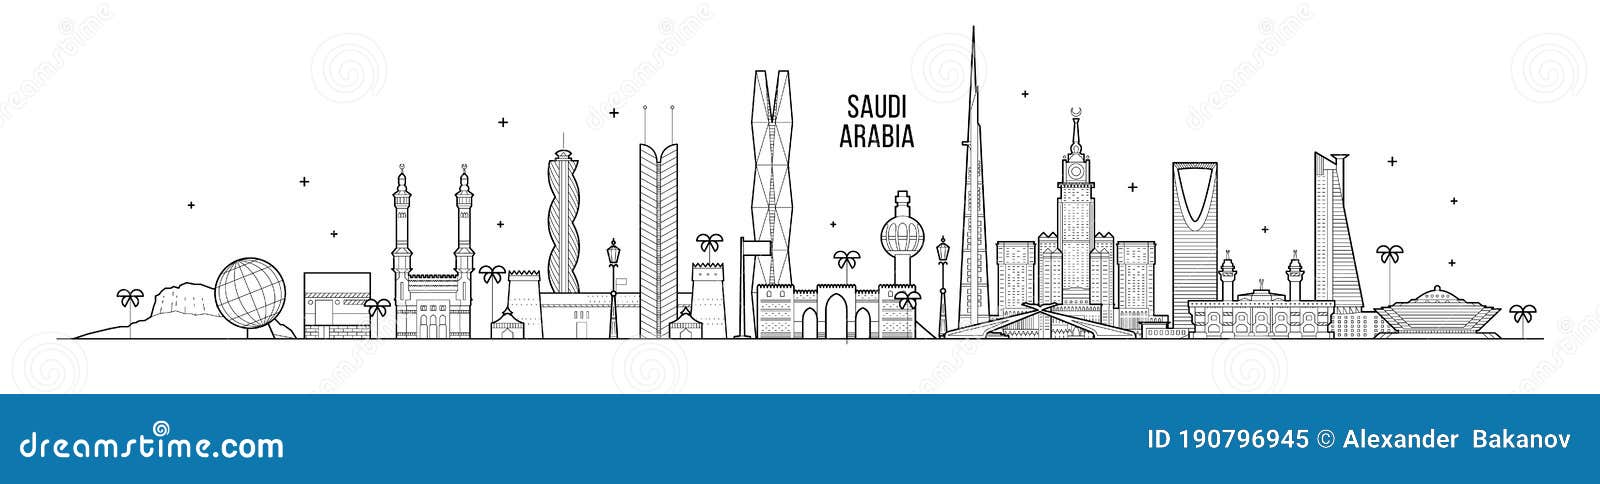 skyline saudi arabia city buildings  linear